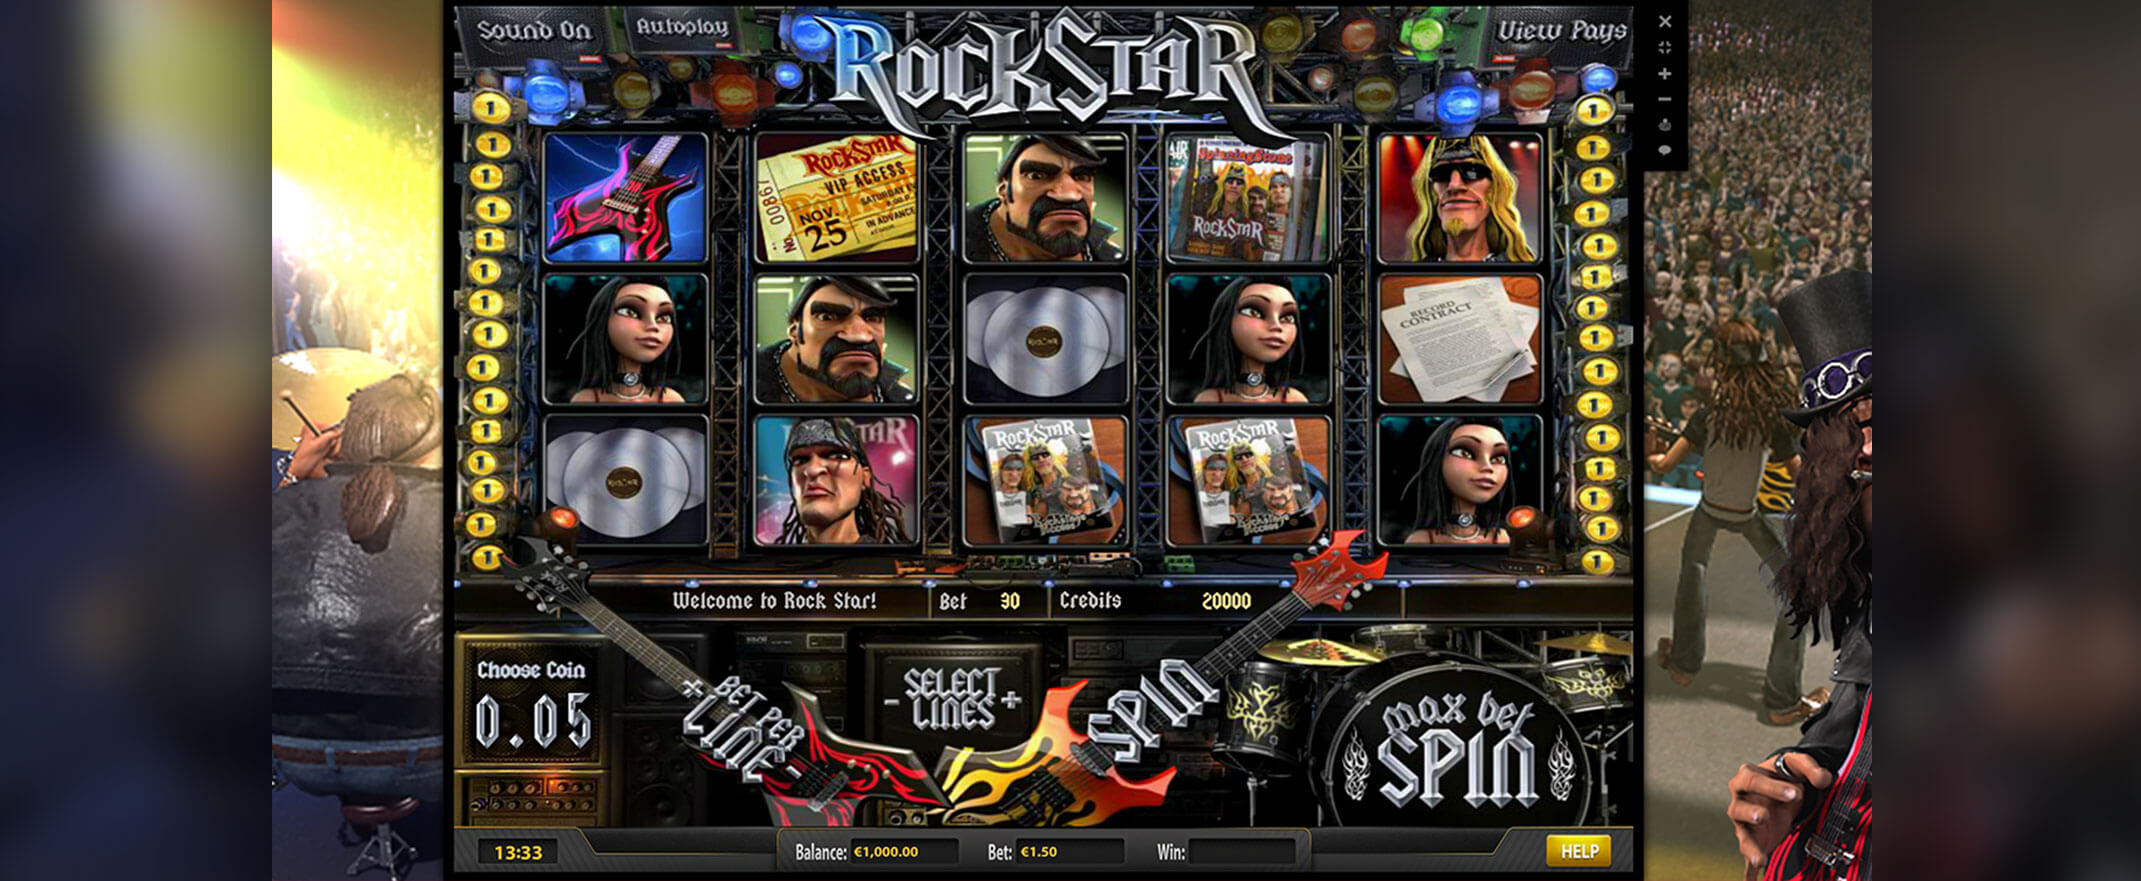 Rock Star Spielautomat spielen